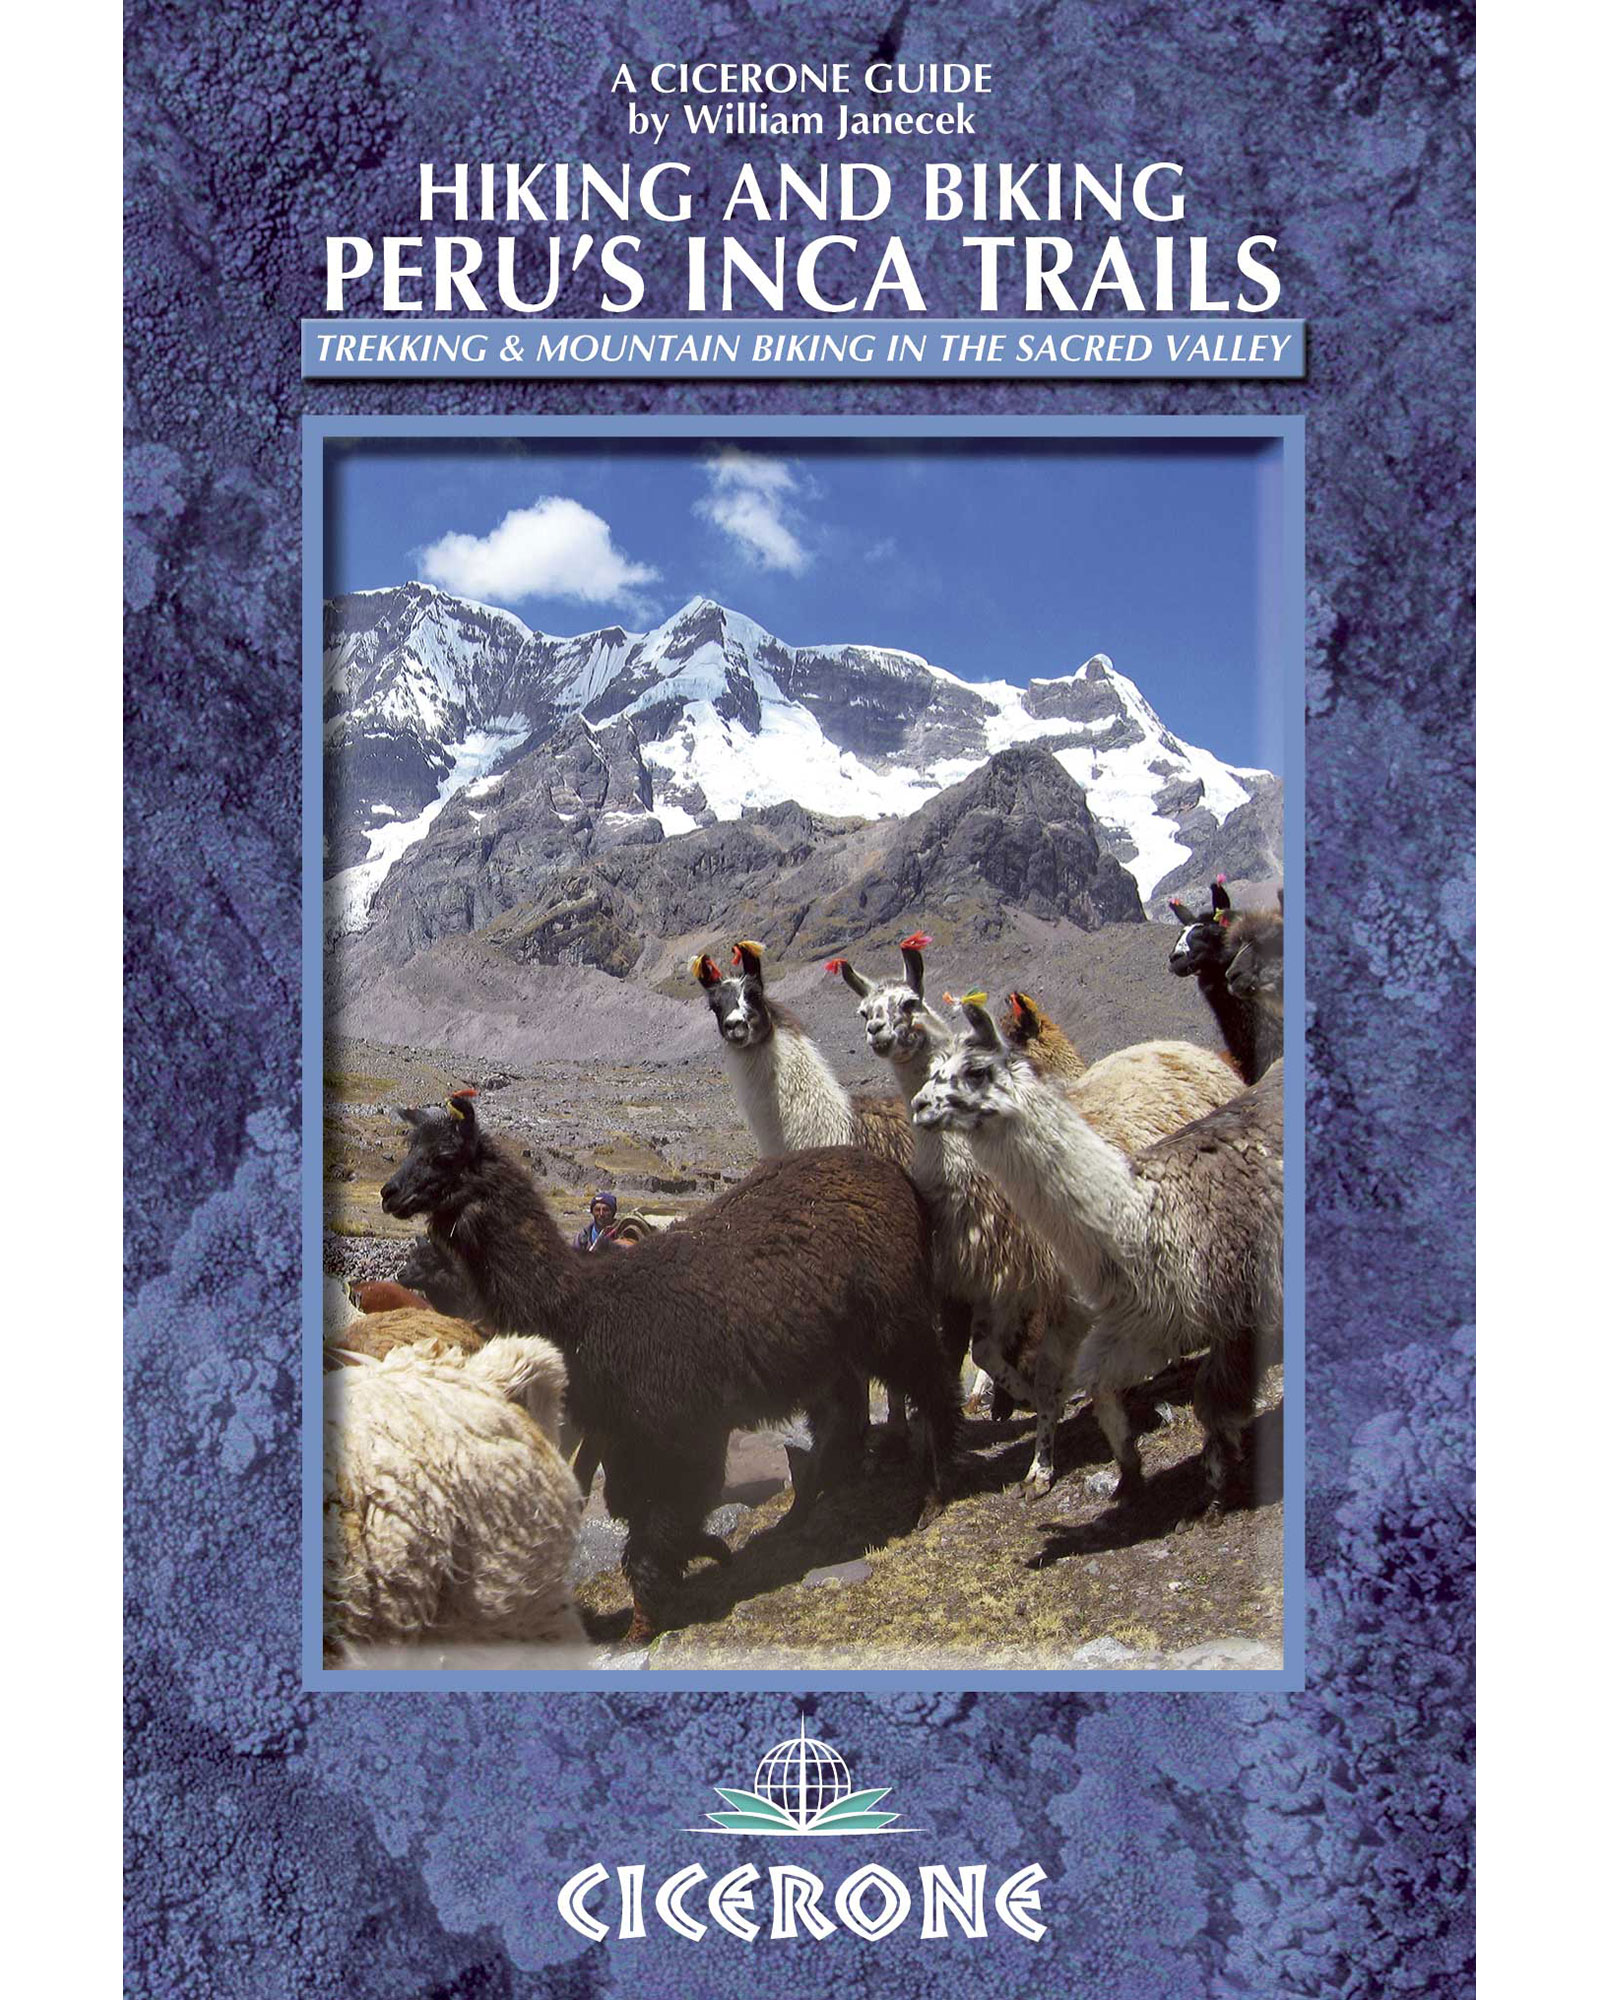 Cicerone HikingandBiking Perus Inca Trails Guide Book